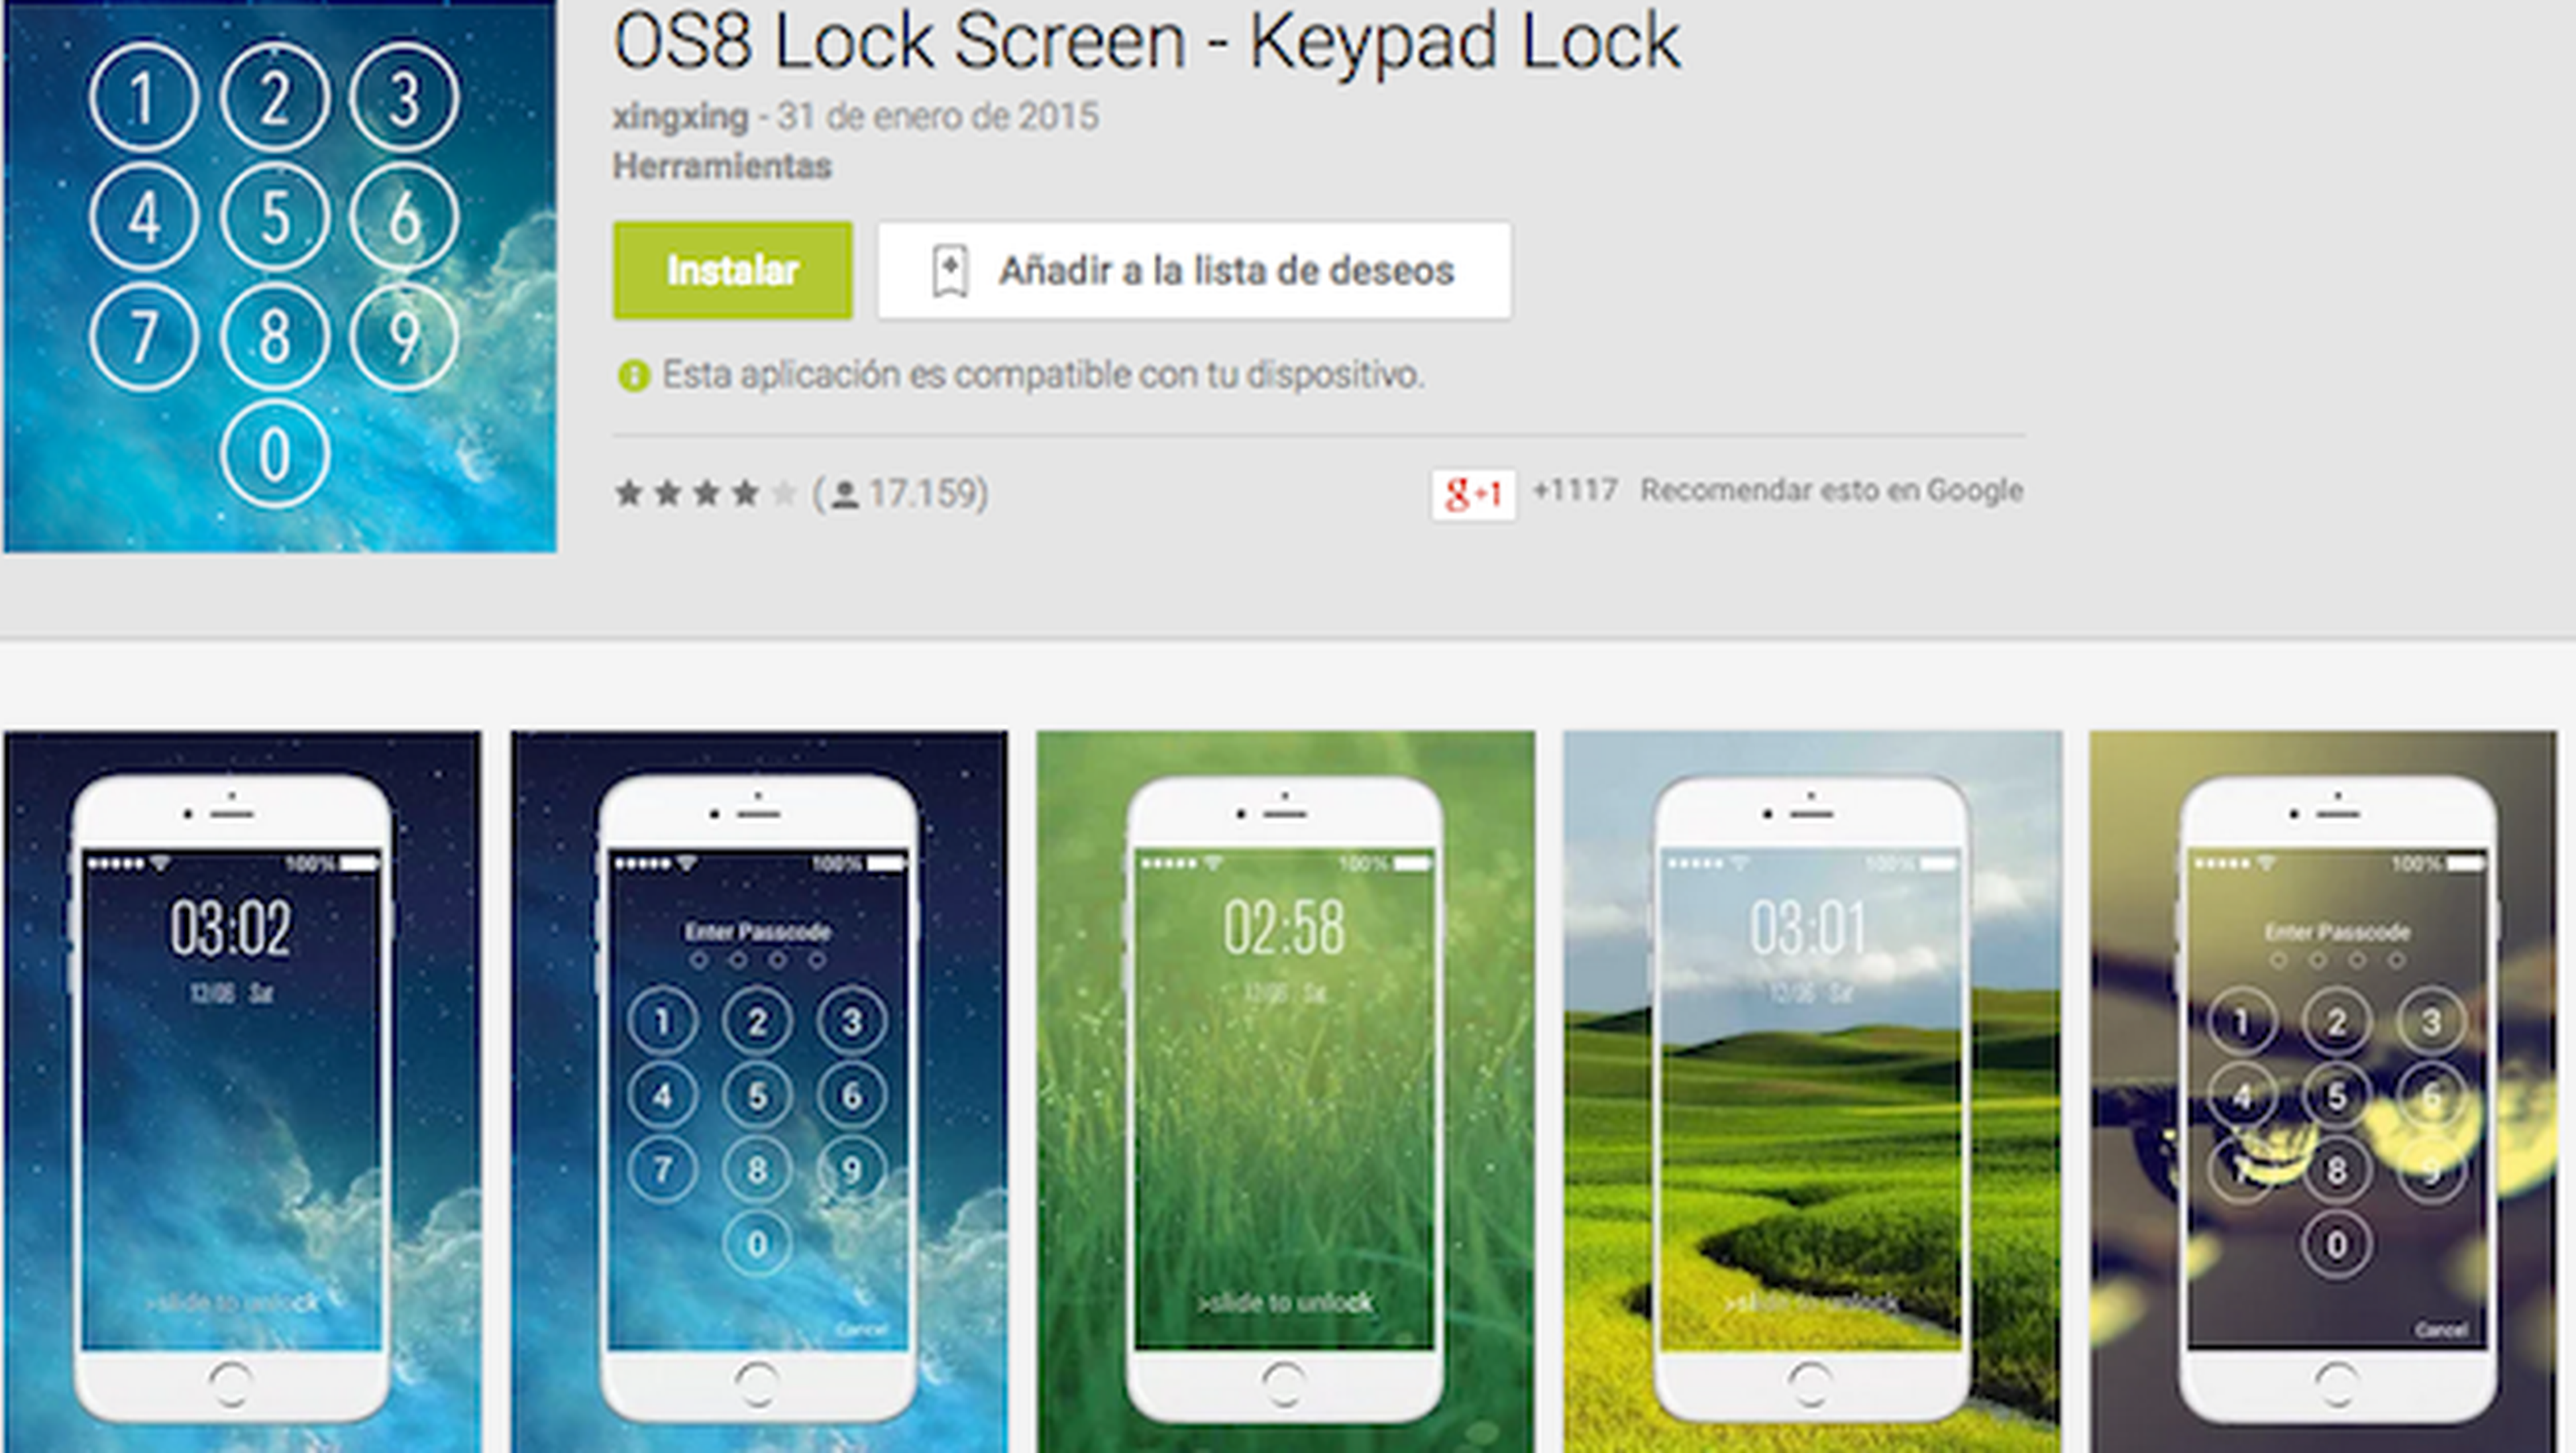 OS8 Lock Screen, apps para convertir tu Android en un iPhone